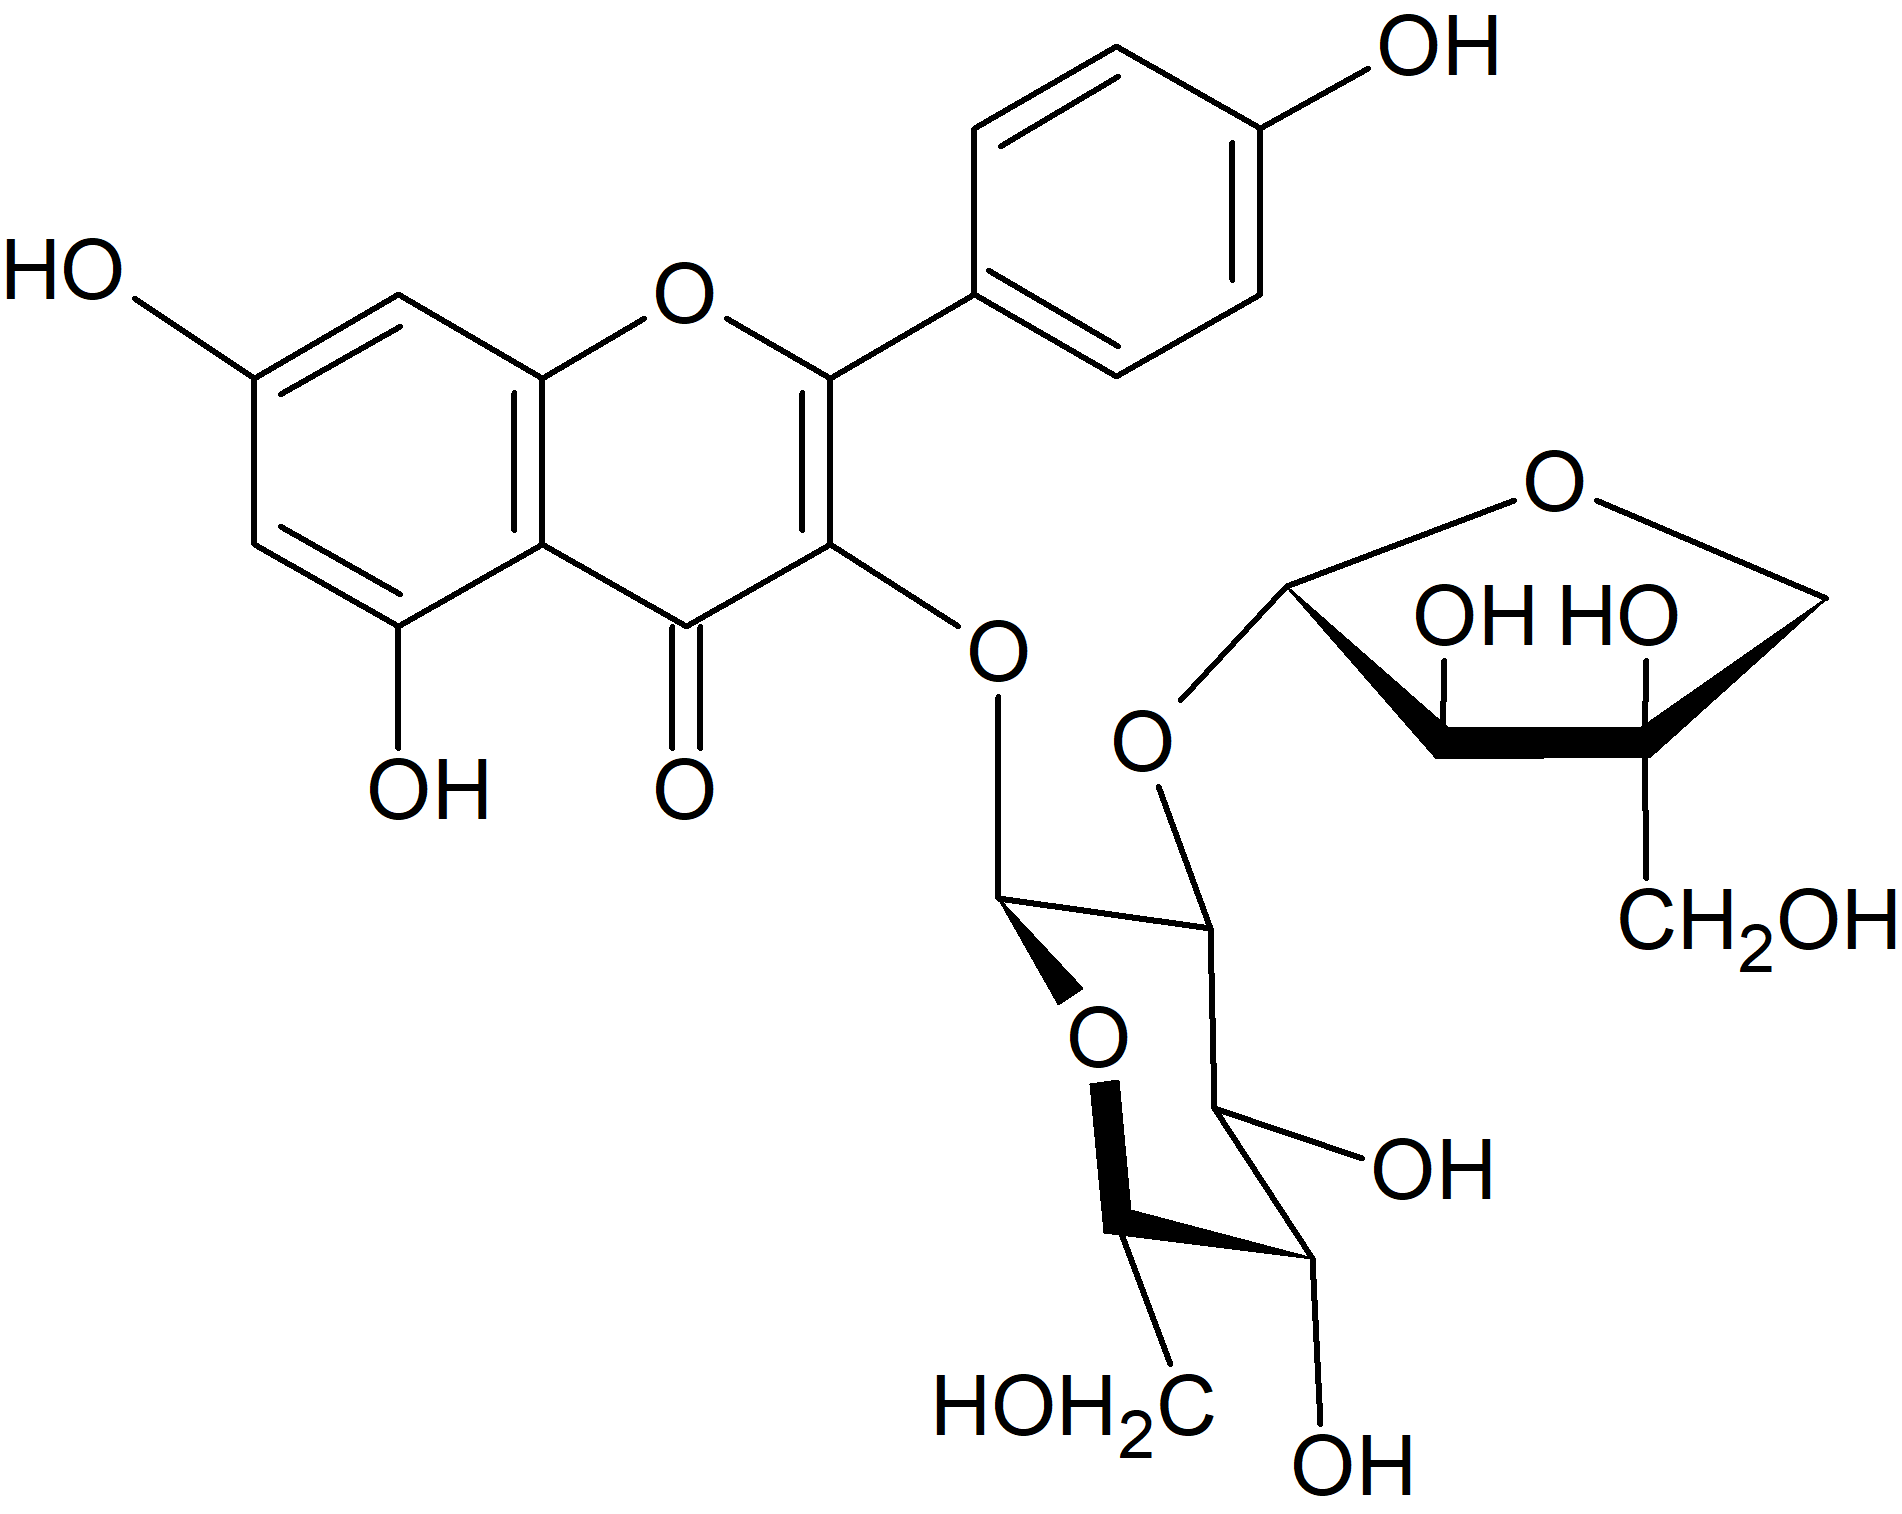 Kaempferol 3-O-apiofuranosyl-(1→2)-glucoside